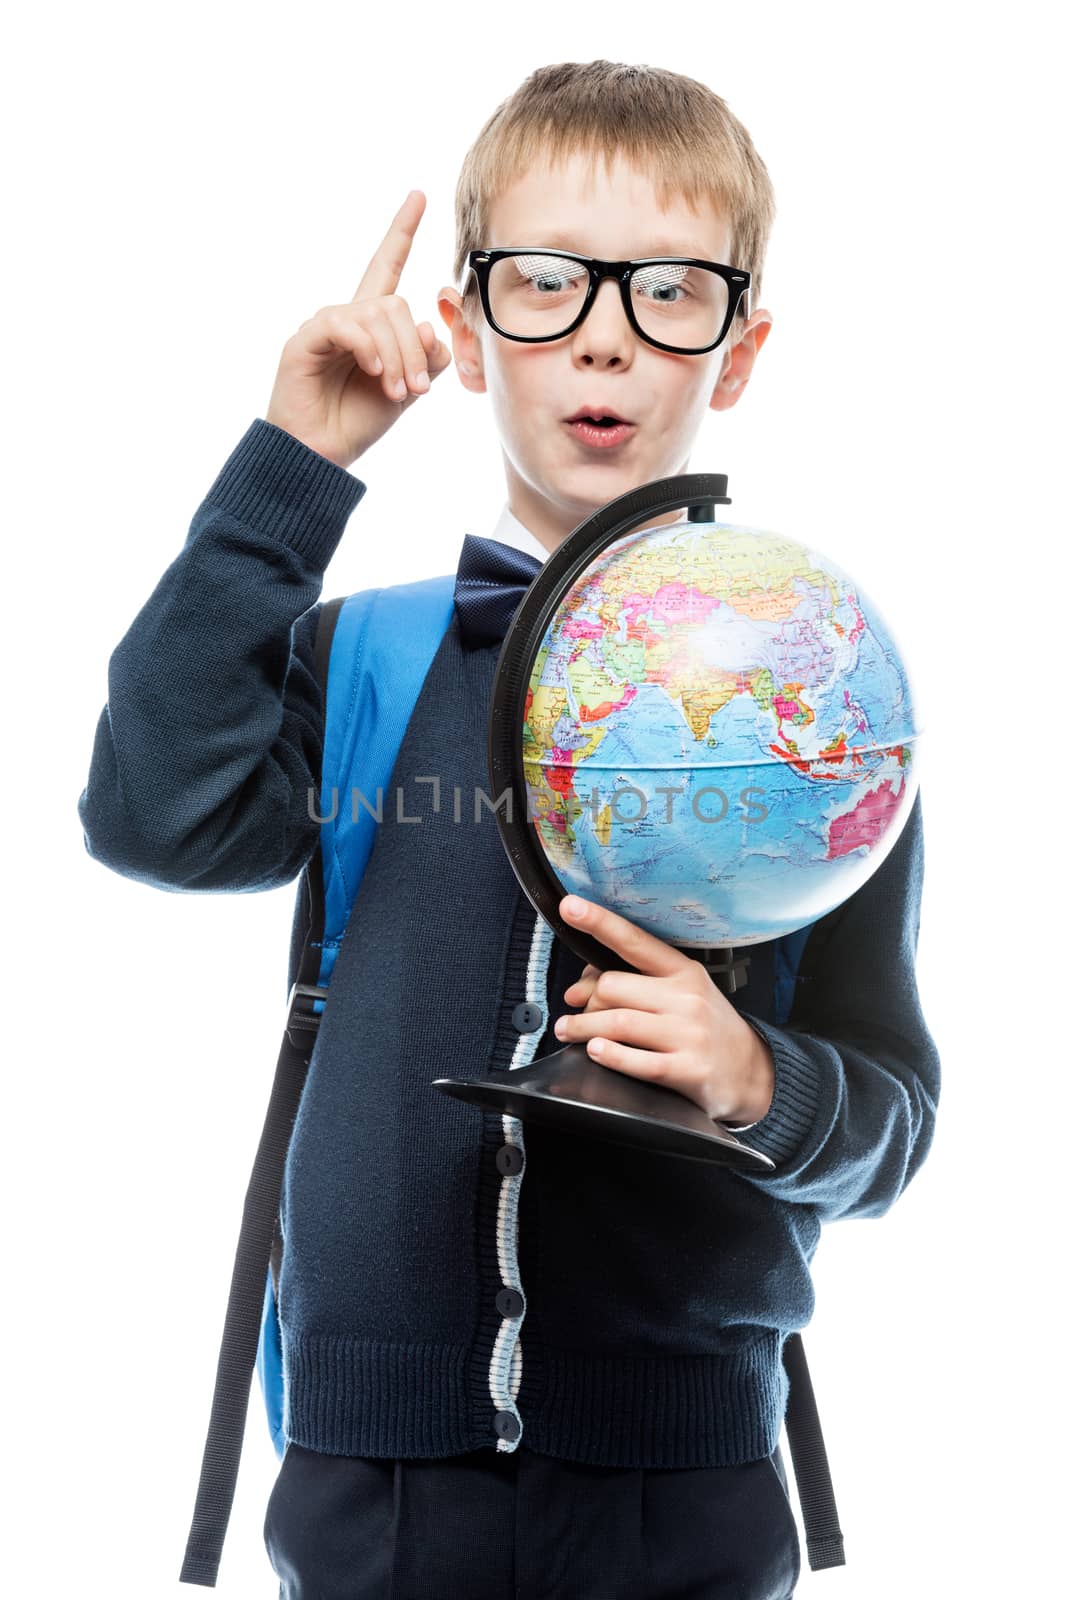 emotional schoolboy with globe has a good idea, portrait is isol by kosmsos111